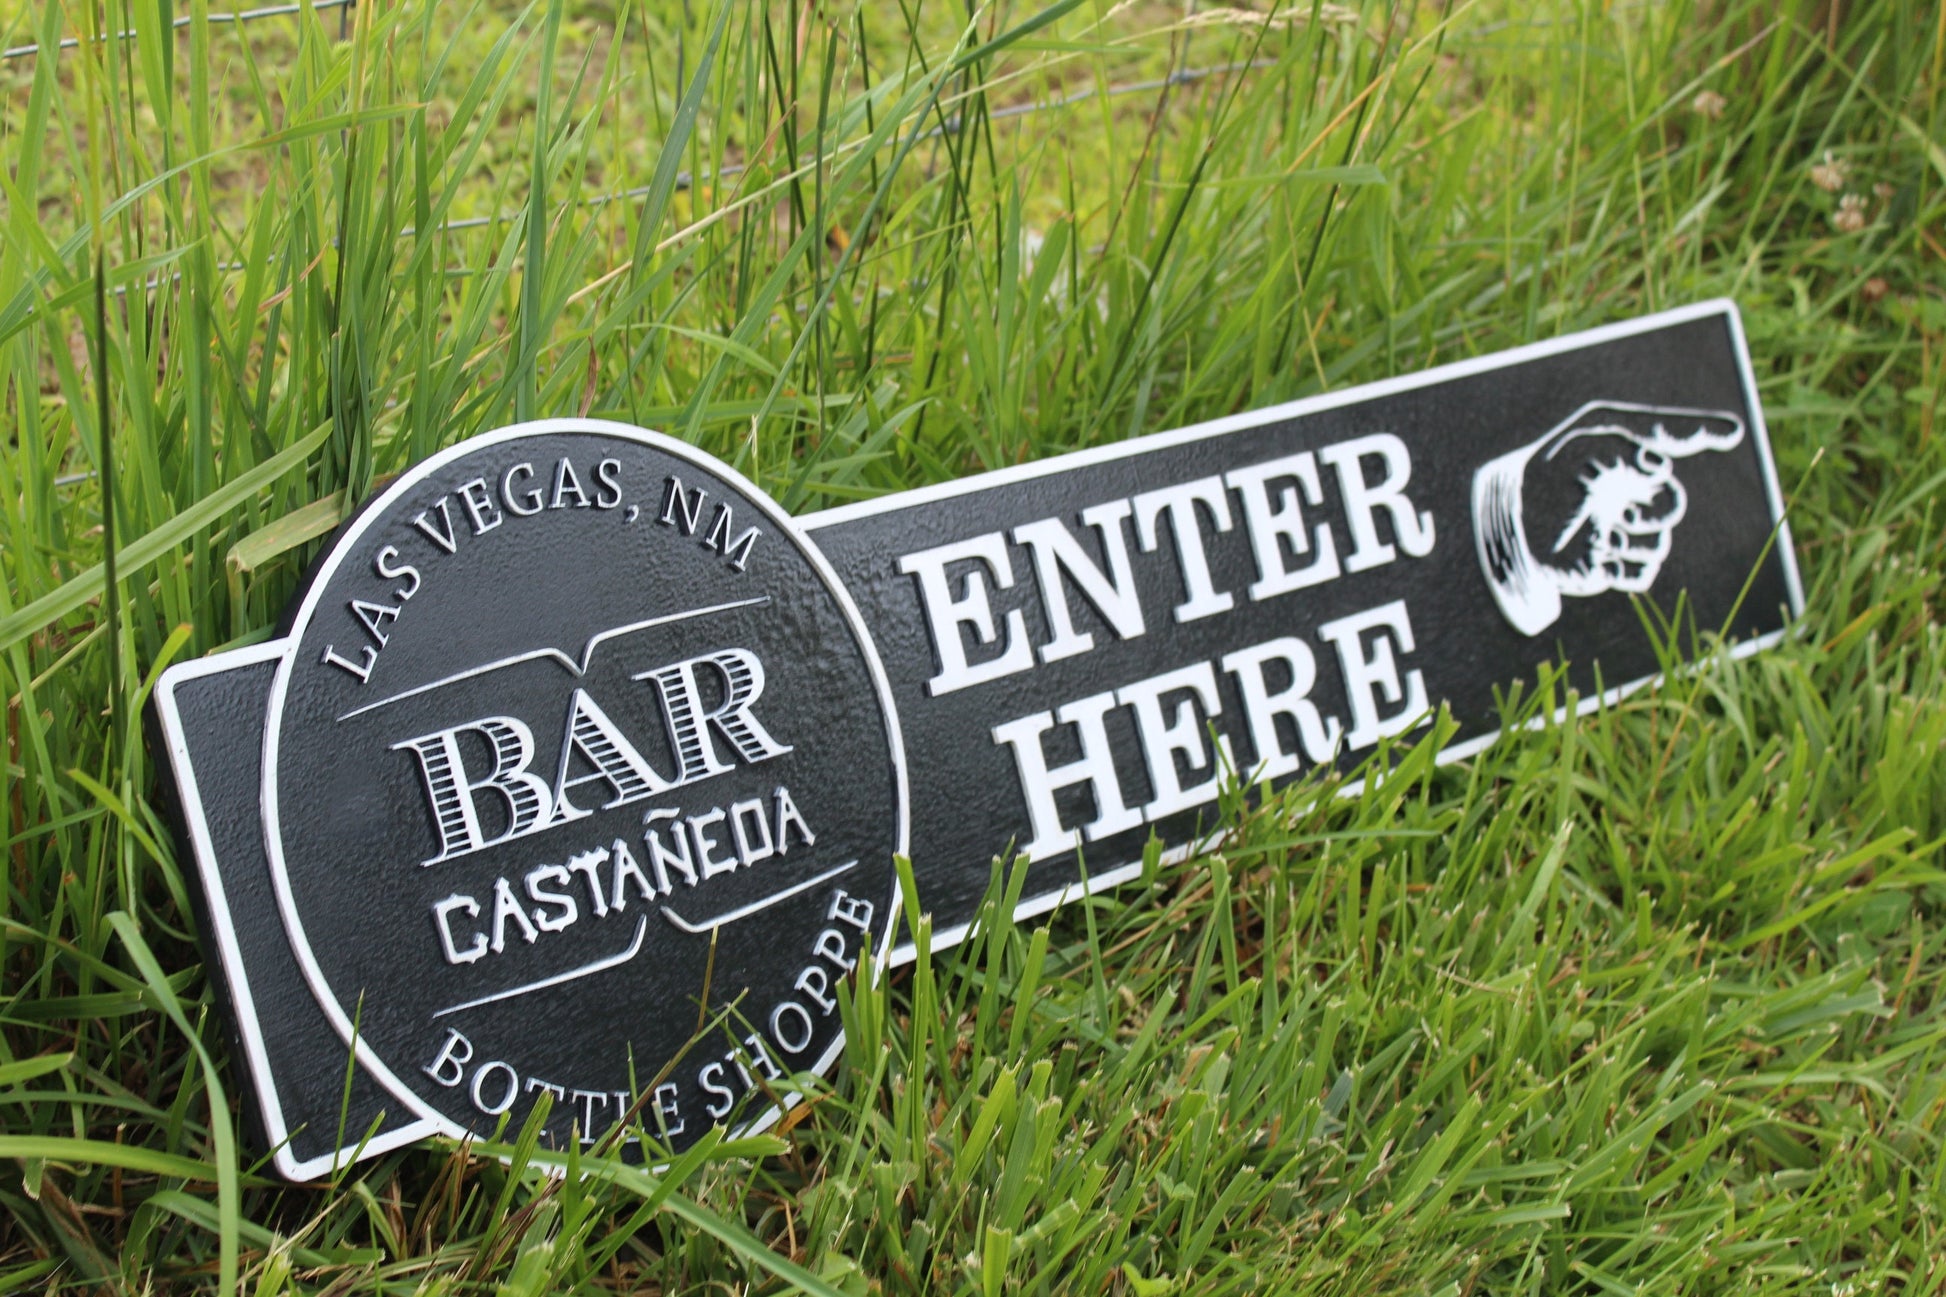 Custom Signage Logo Vintage Bar Sign Bottle Shop Enter Here ExtraLarge Finger Pointing Rustic Small Company Restaurant Indoor Outdoor Emblem